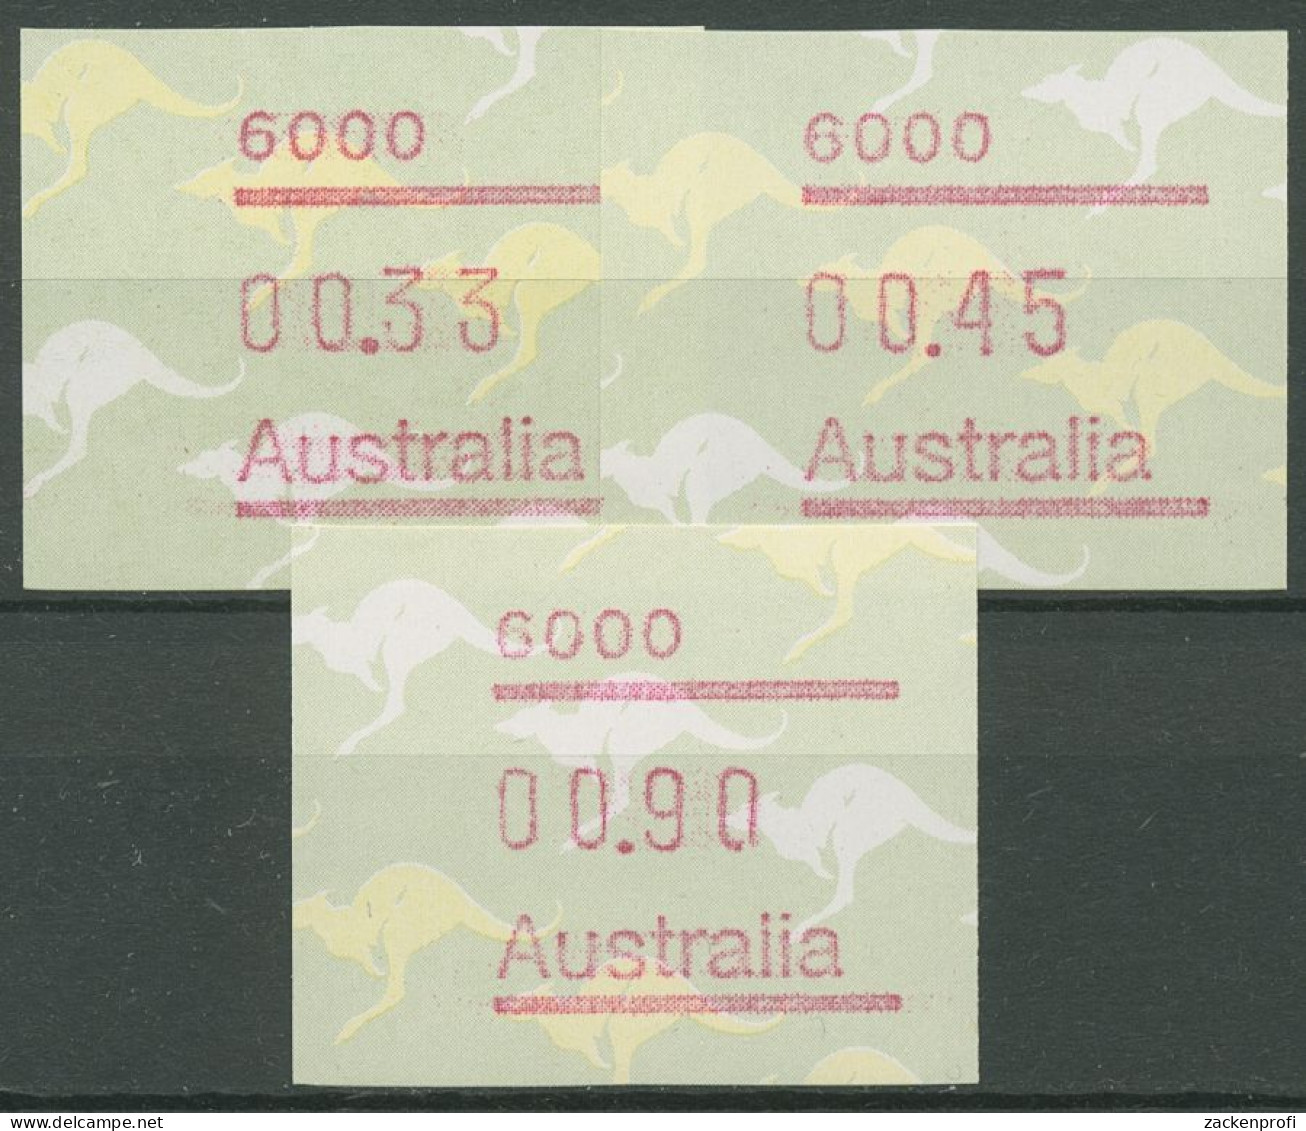 Australien 1985 Känguruh Tastensatz Automatenmarke 4 S1, 6000 Postfrisch - Viñetas De Franqueo [ATM]